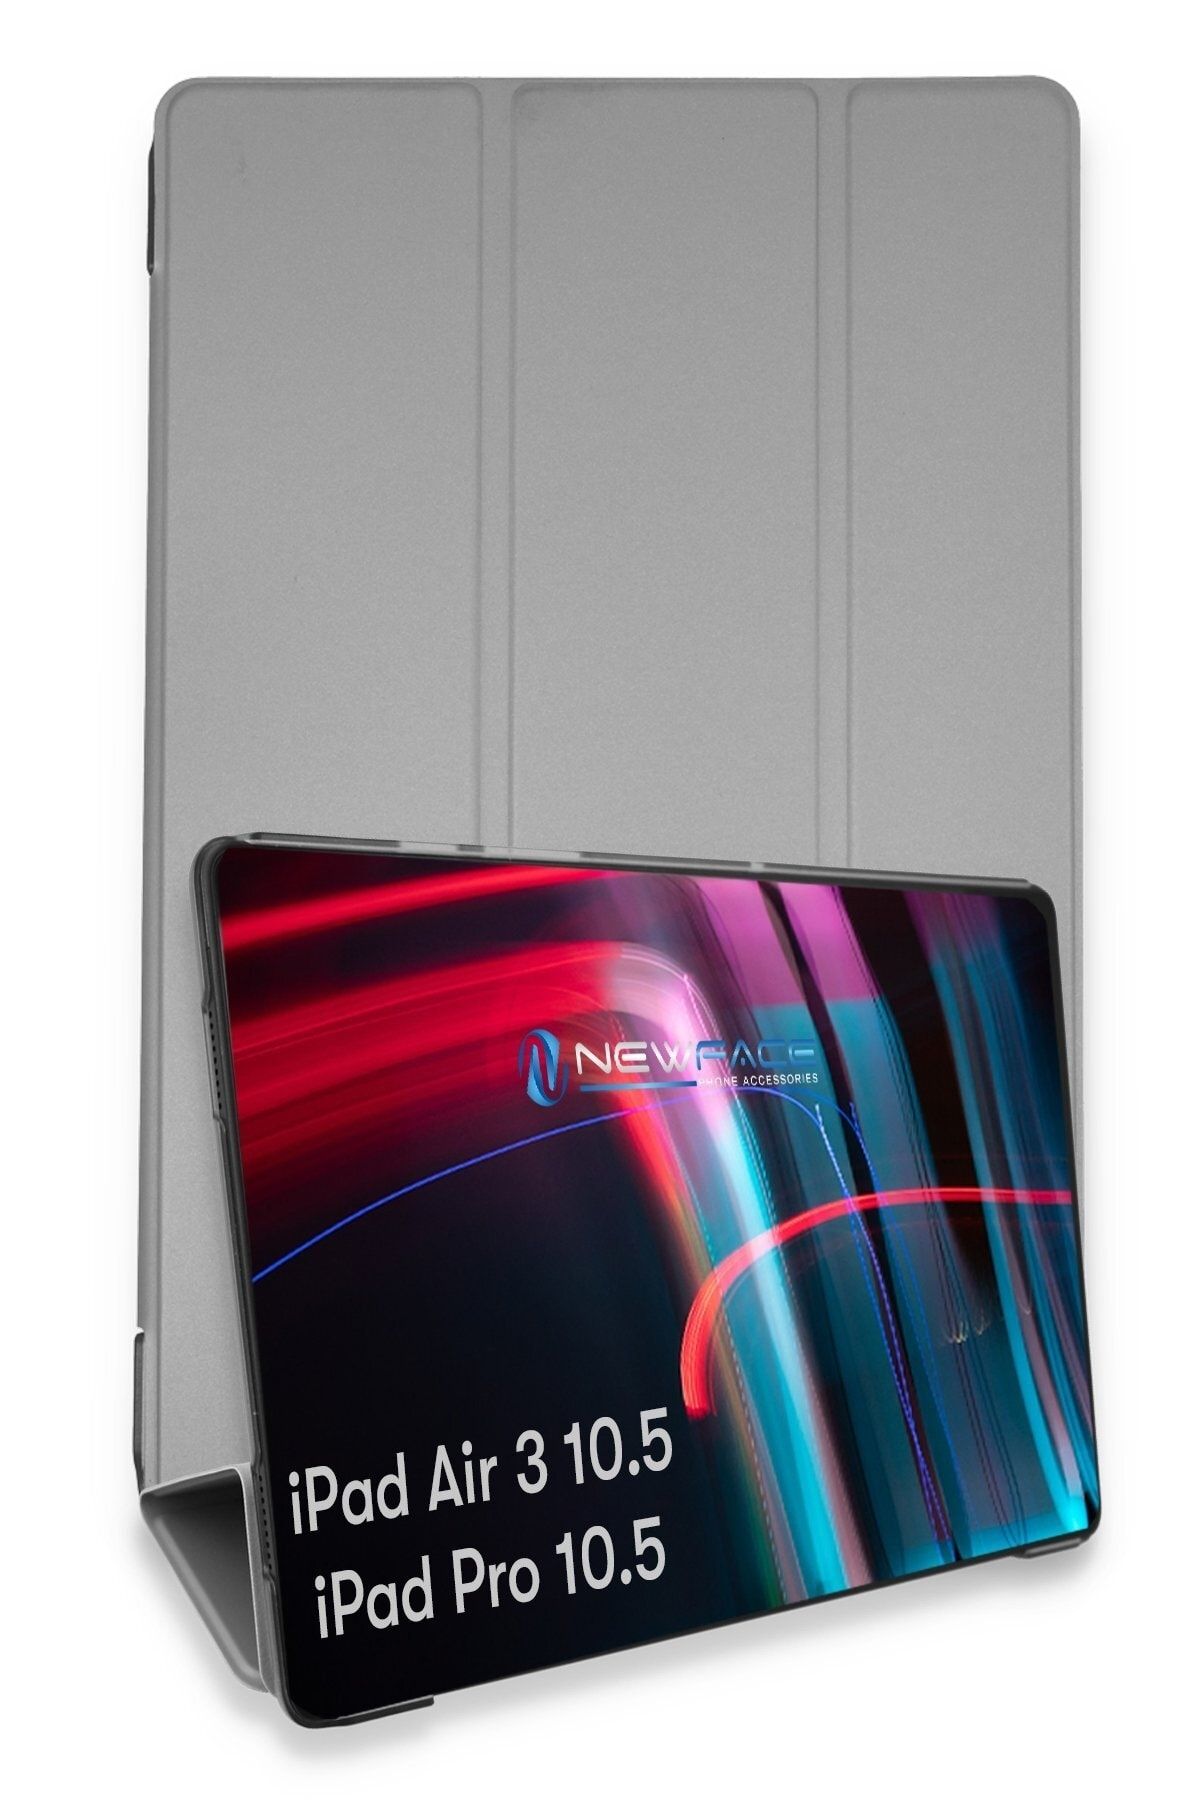 Bilişim Aksesuar Ipad Pro 10.5 Kılıf Tablet Smart Cover Kılıf - Gri